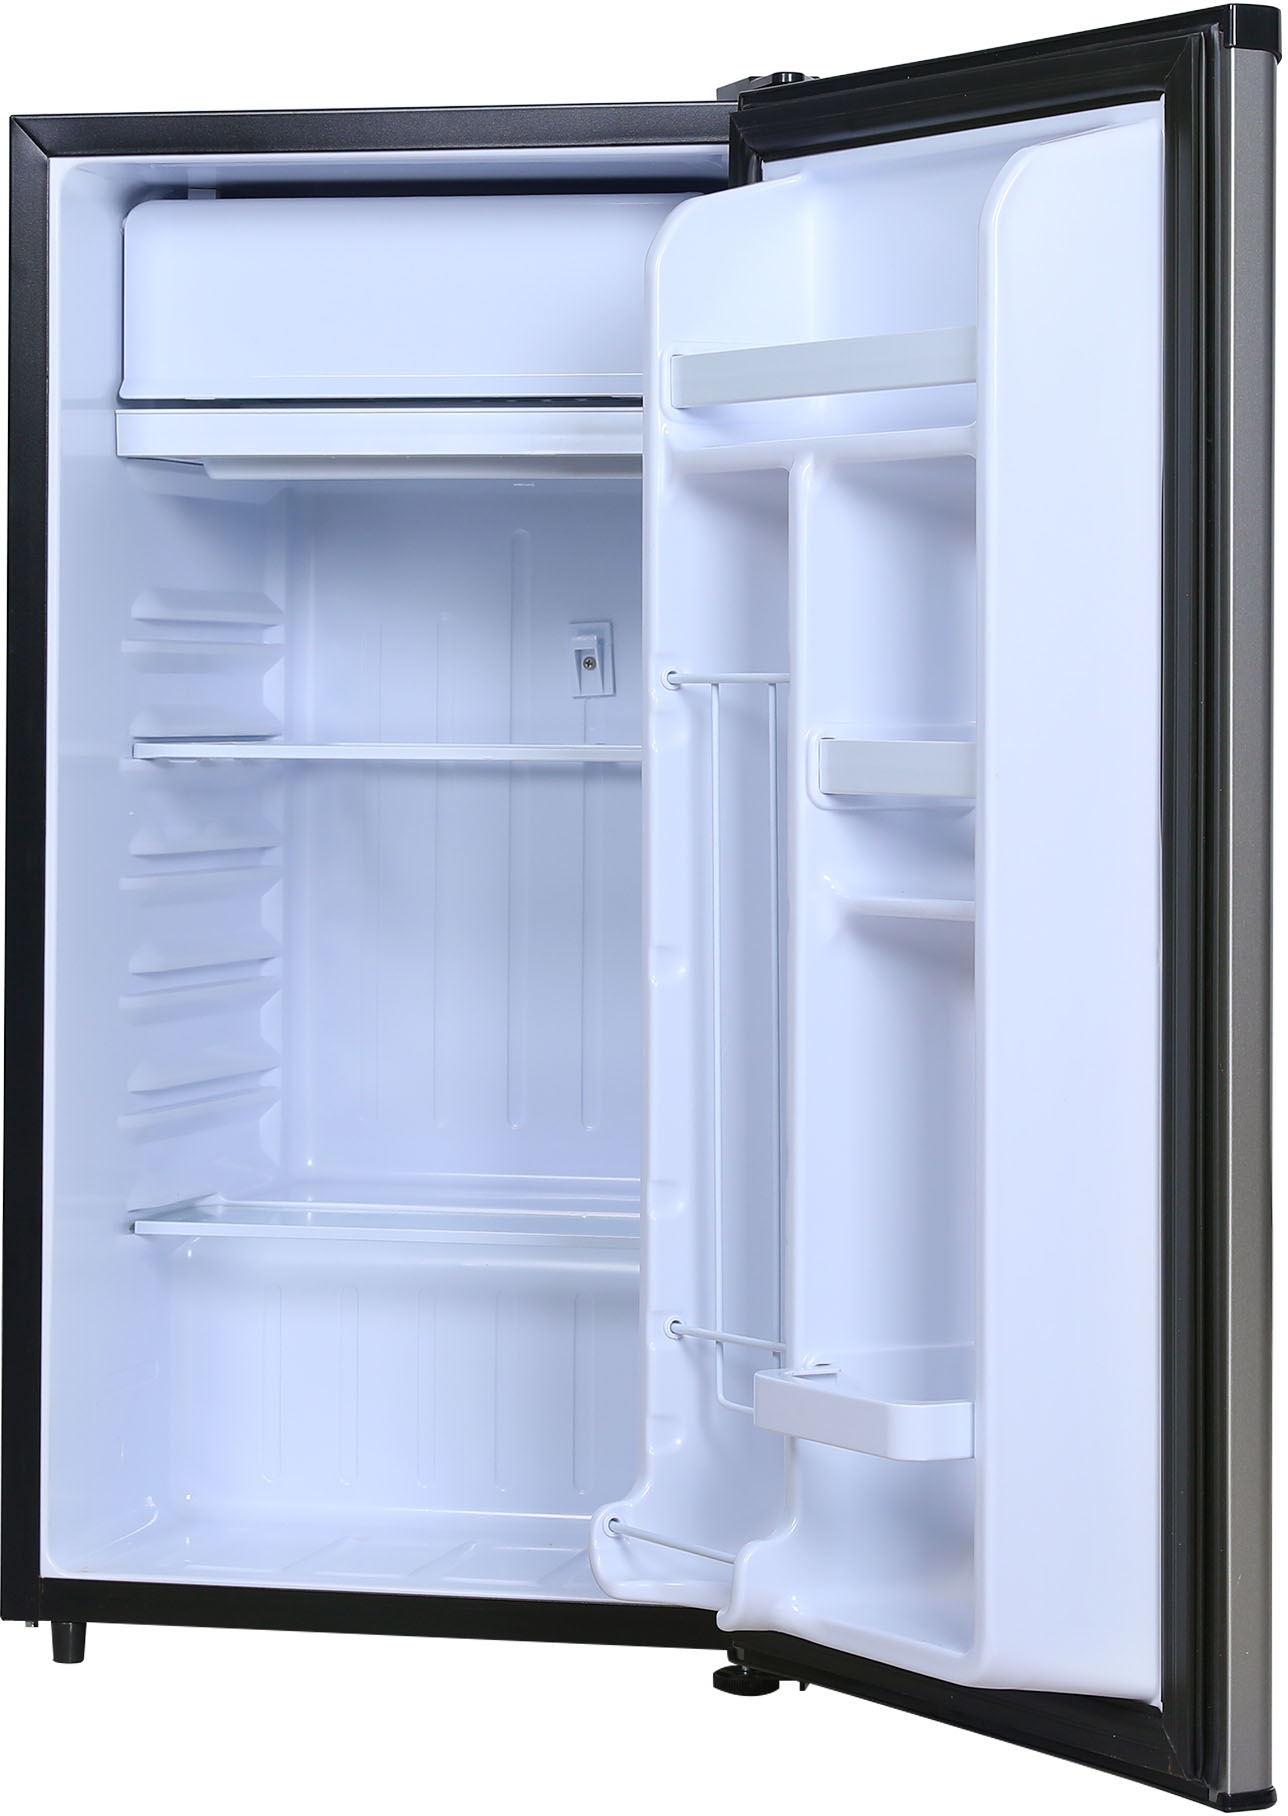 Slim Fridge, Refrigerators